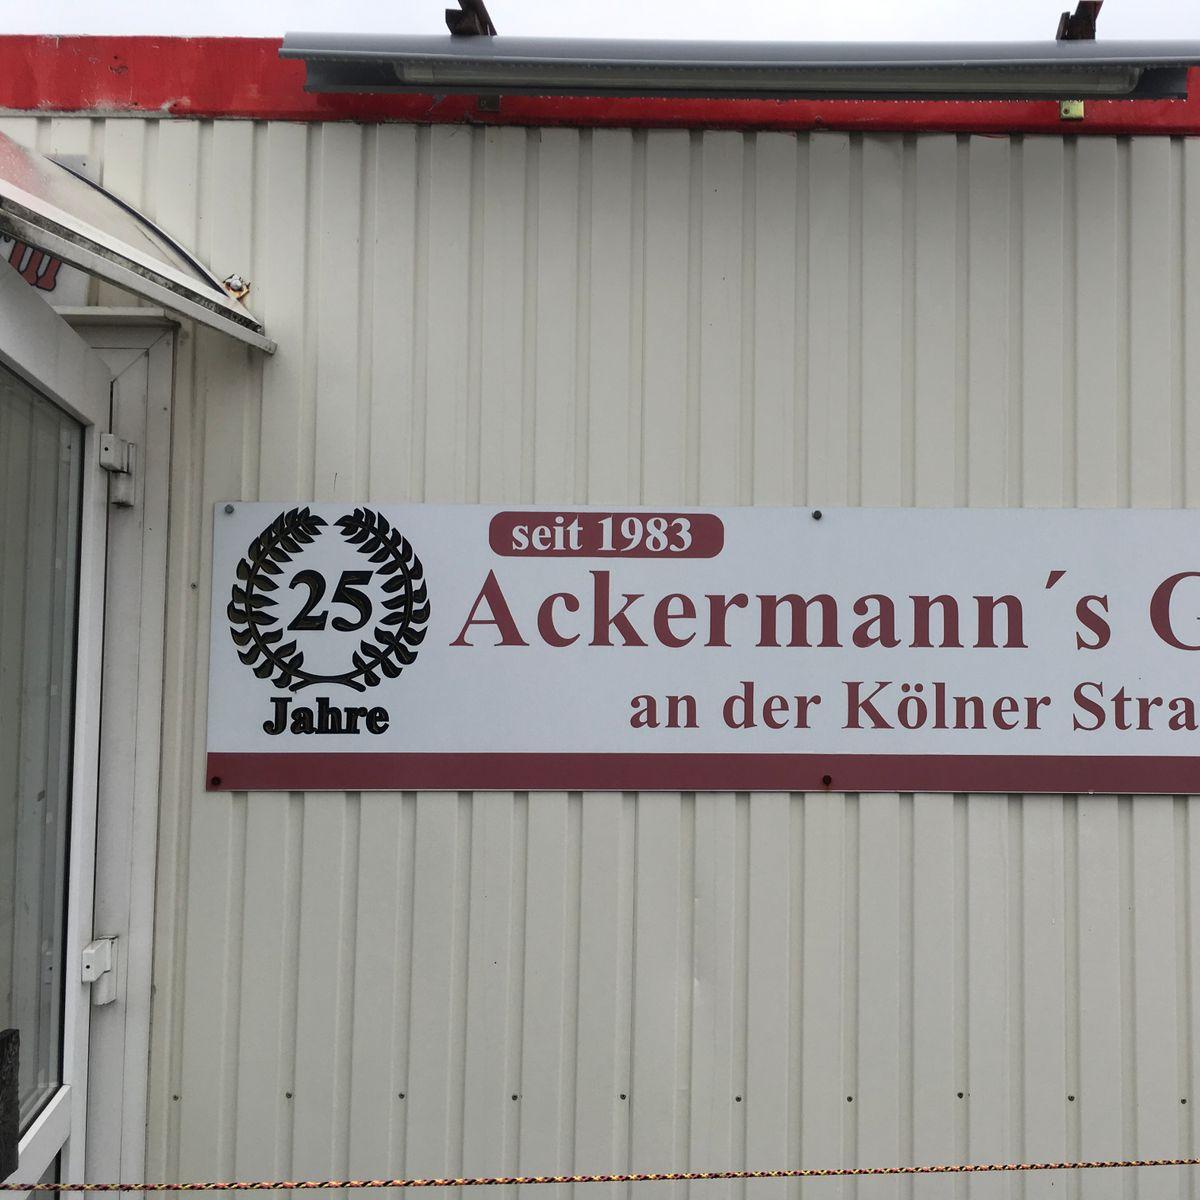 Restaurant "Ackermann